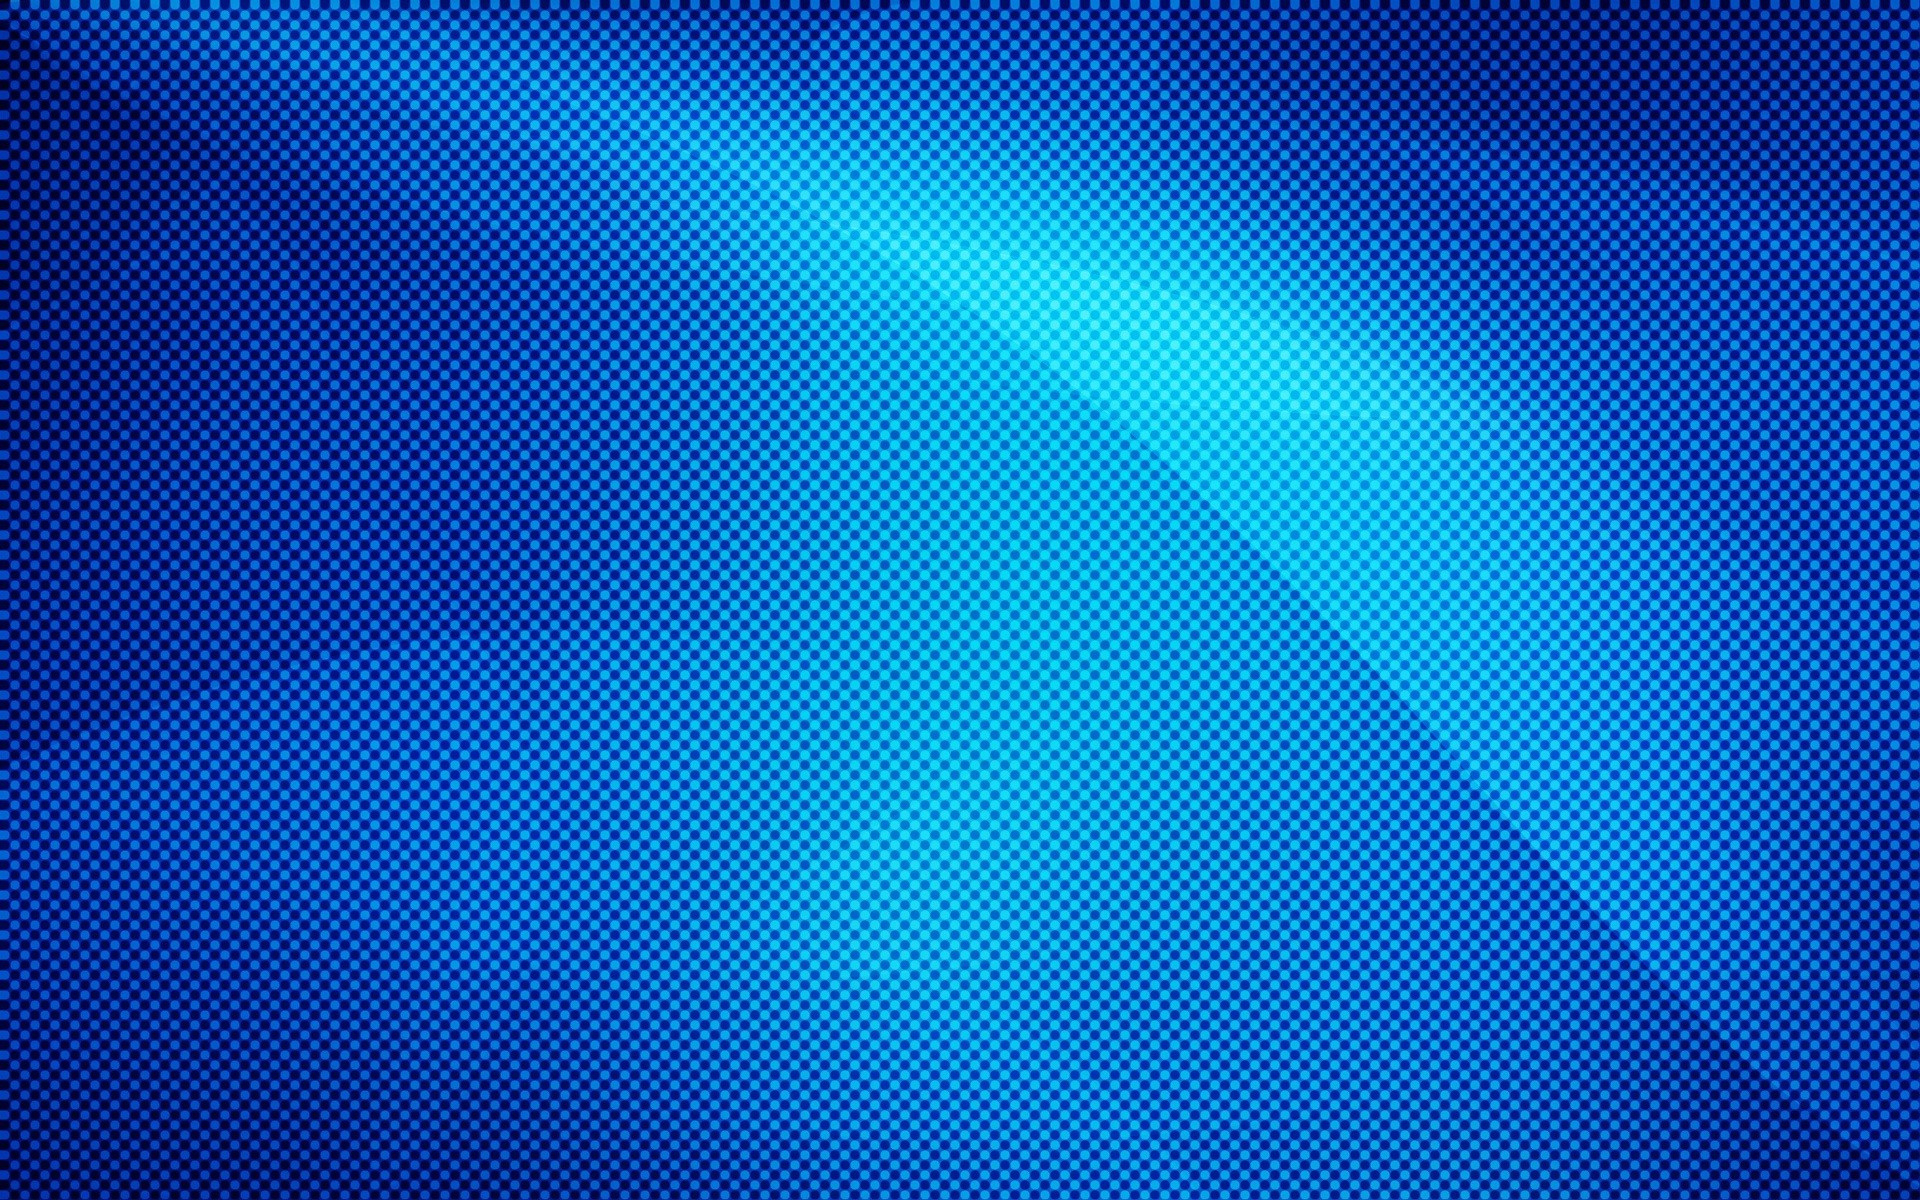 1920x1200 Blue shine marvelous computer background images